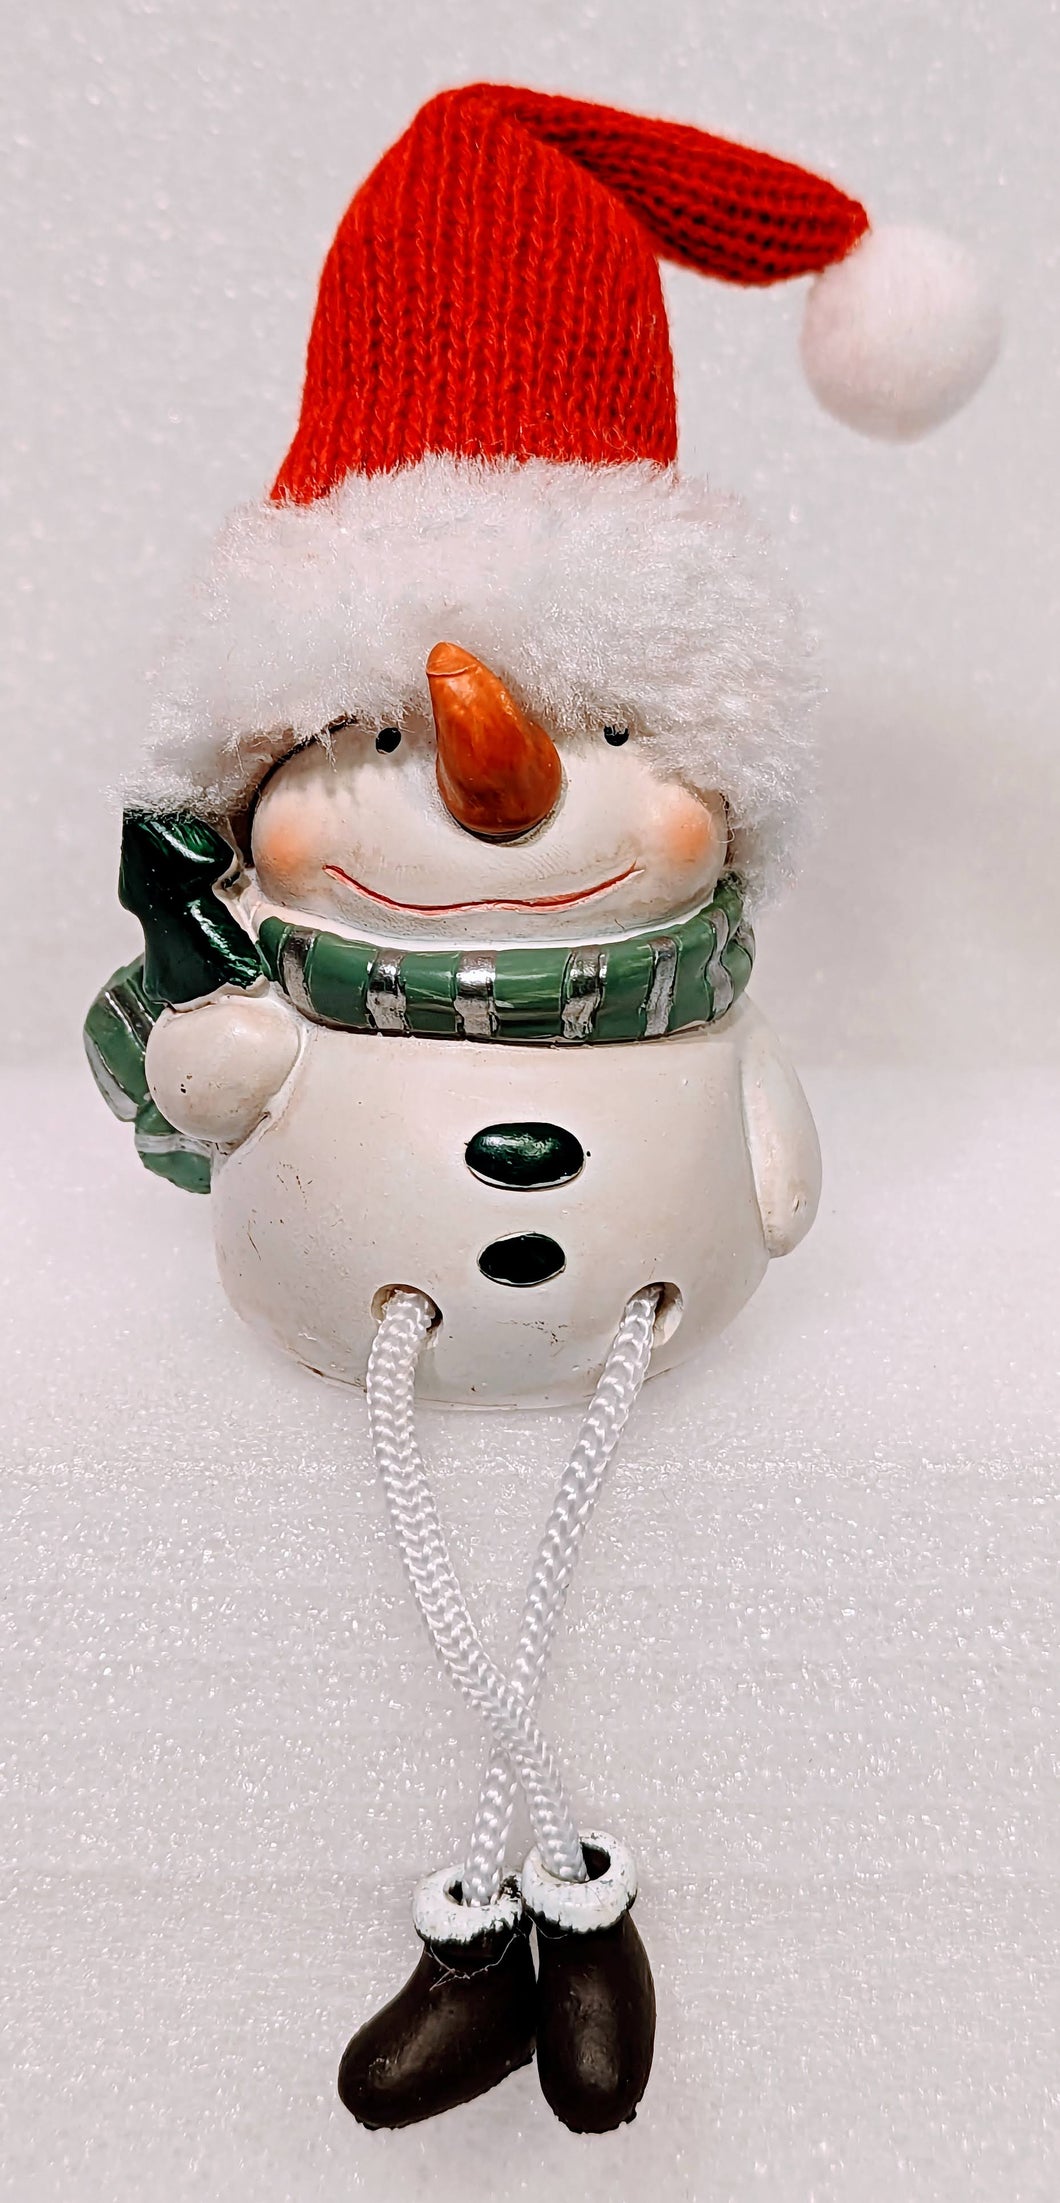 Merry Snowman Shelf Sitter Holding Christmas Tree